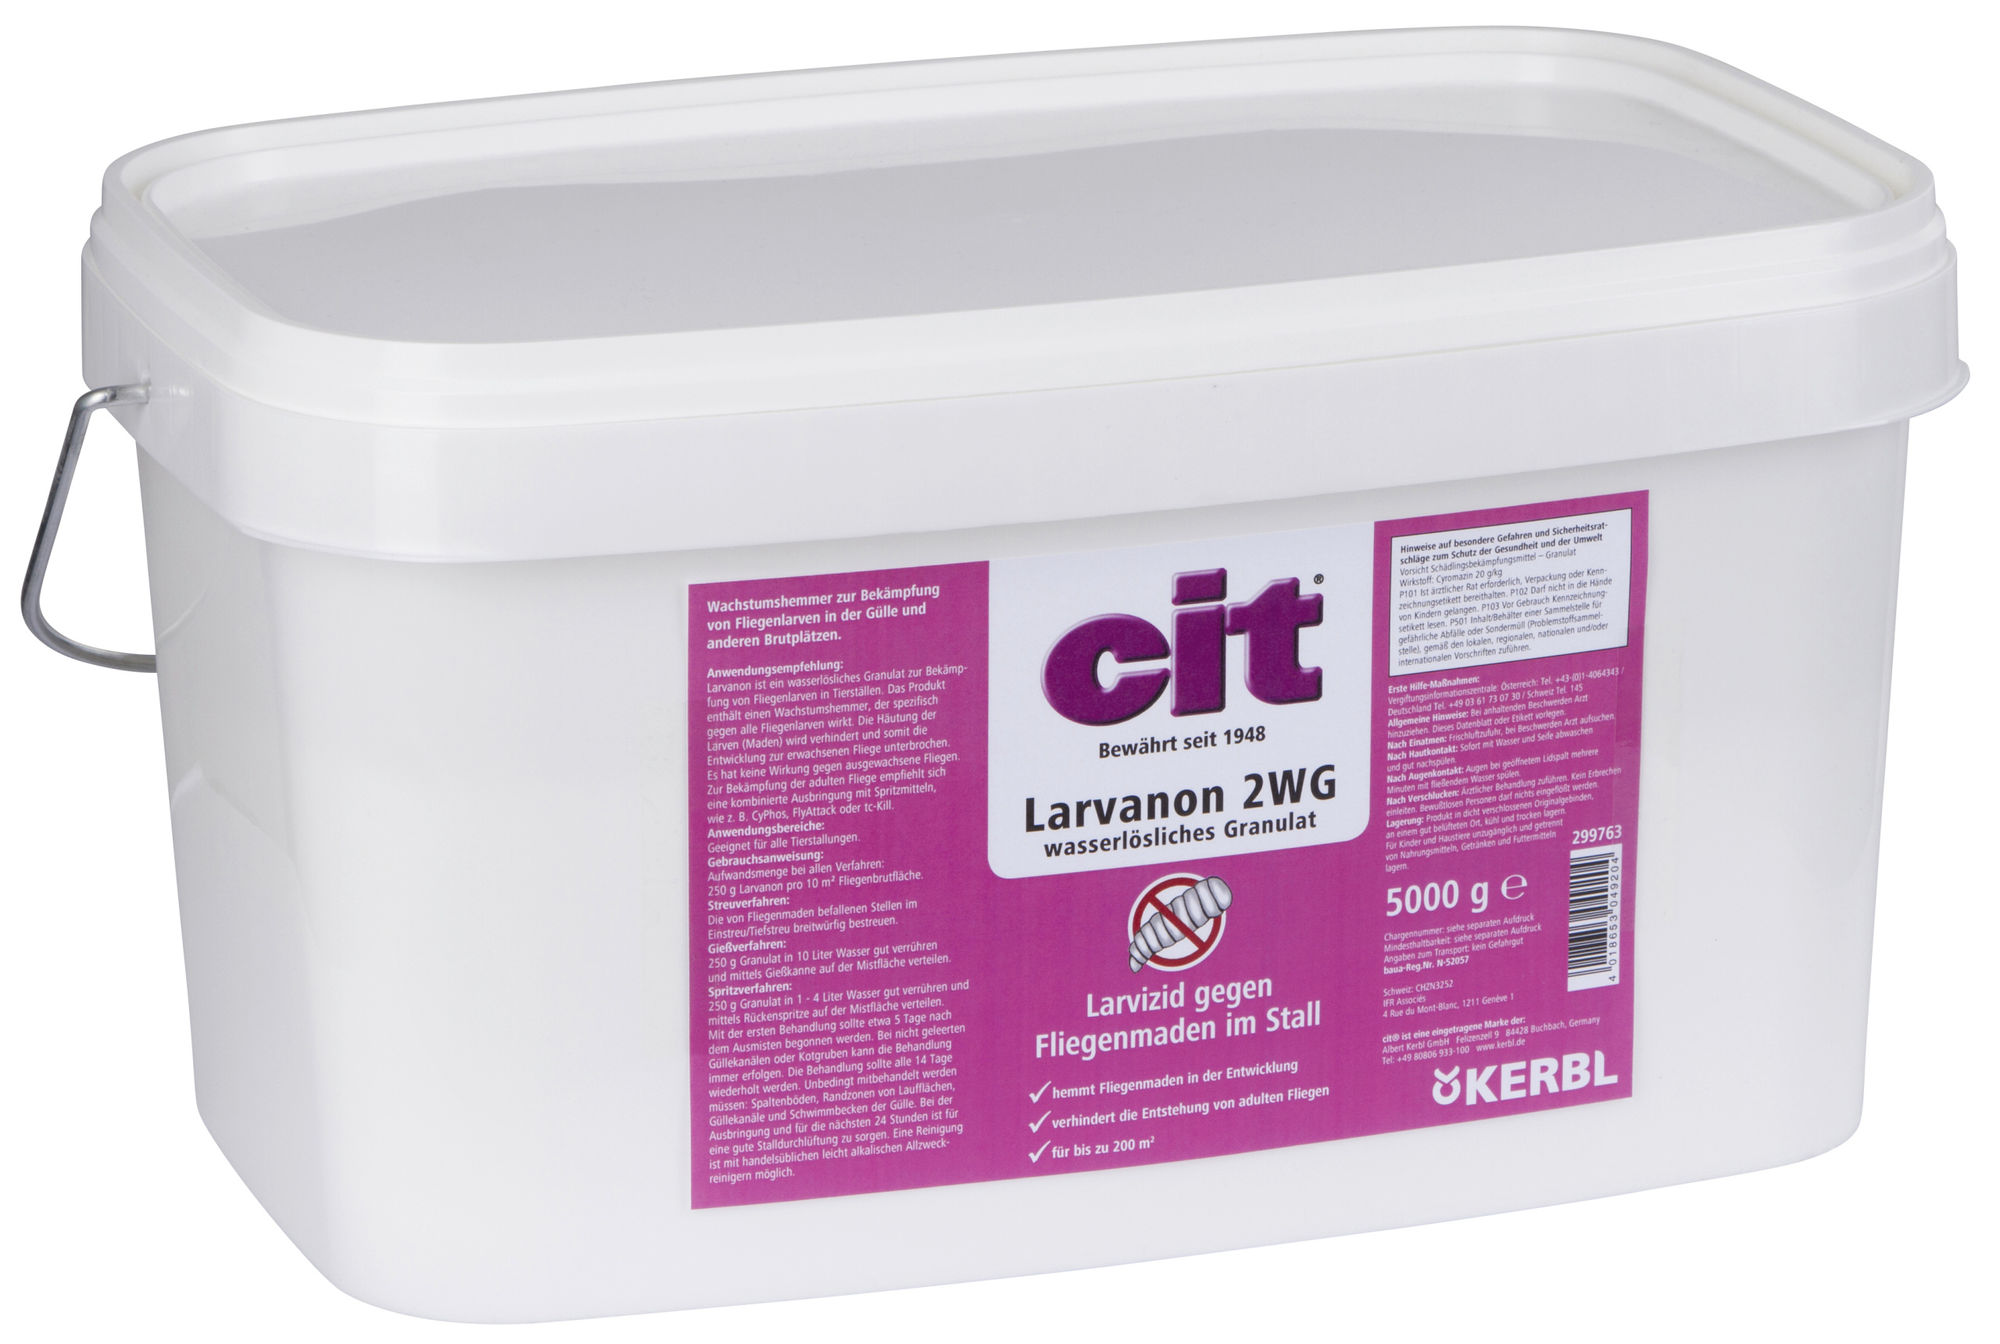 Cit Larvizid Larvanon 5kg 2 SG wasserlösliches Granulat,